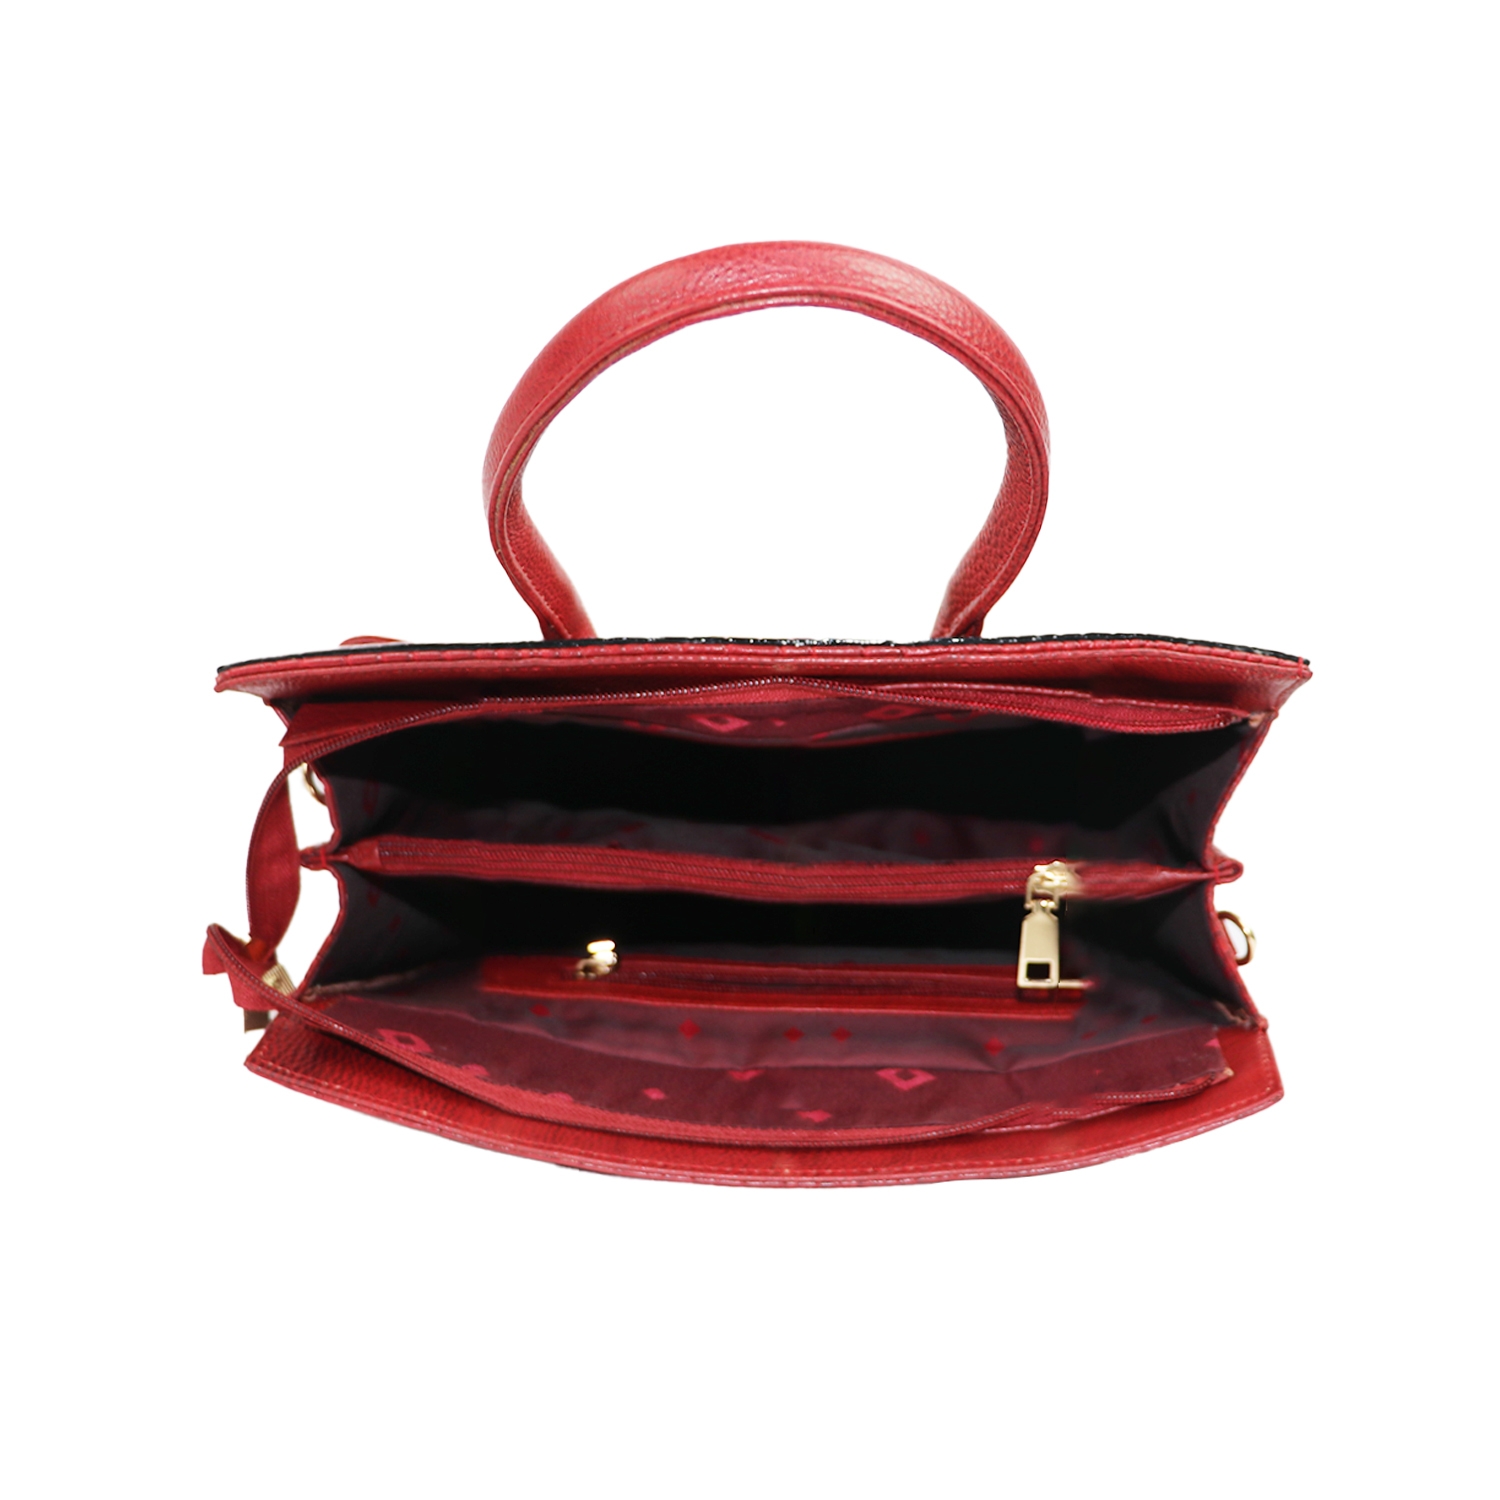 EMM | Women's Leather Crocodile Handbag Crossbody Bag for Women | Cherry Red 5